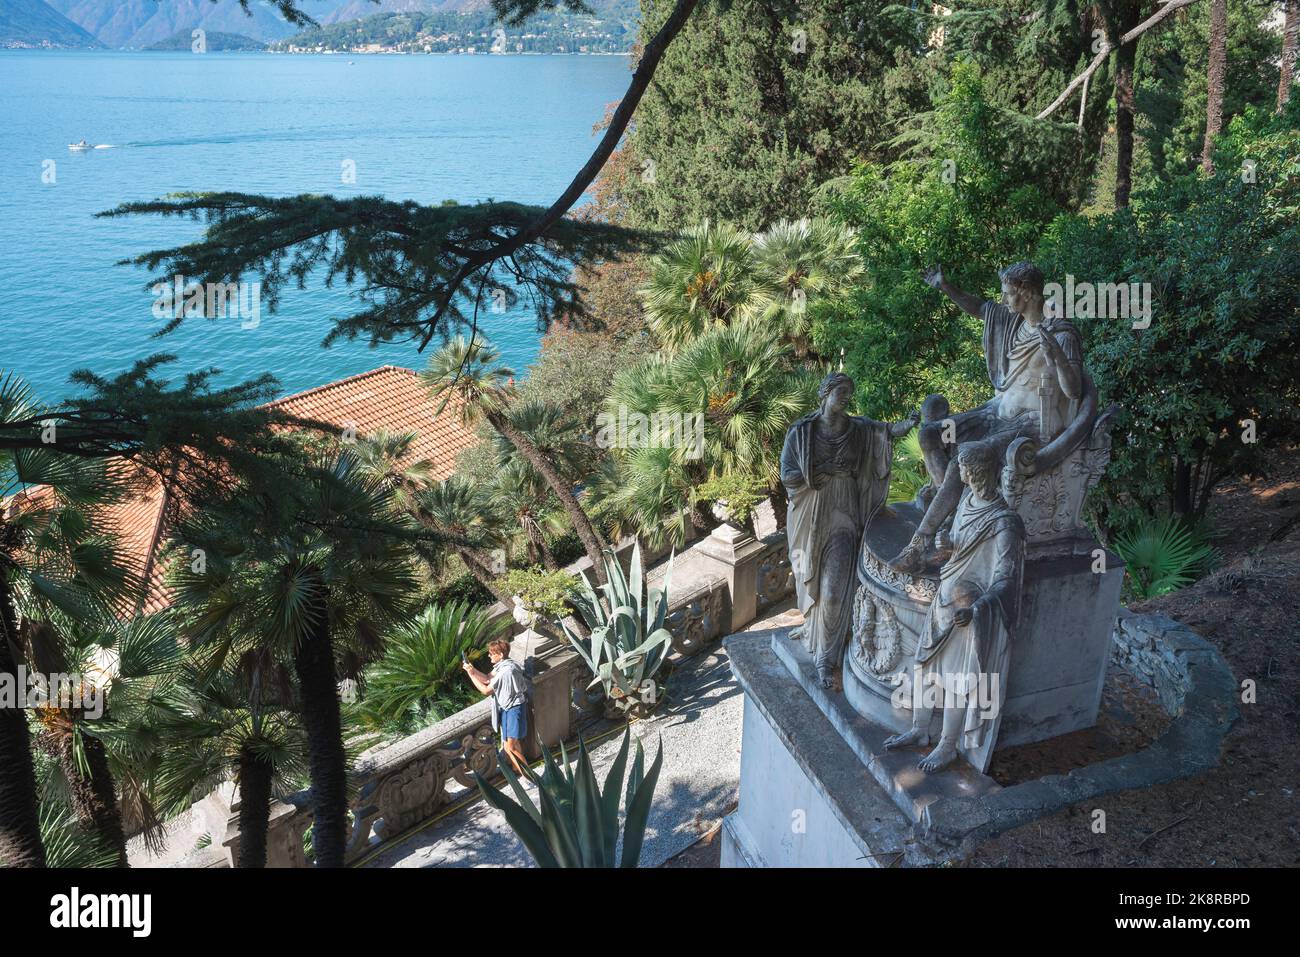 Jardin de la Villa Monastero, vue sur le lac de Côme en contrebas des jardins pittoresques de la Villa Monastero, Varenna, Lac de Côme, Lombardie, Italie Banque D'Images